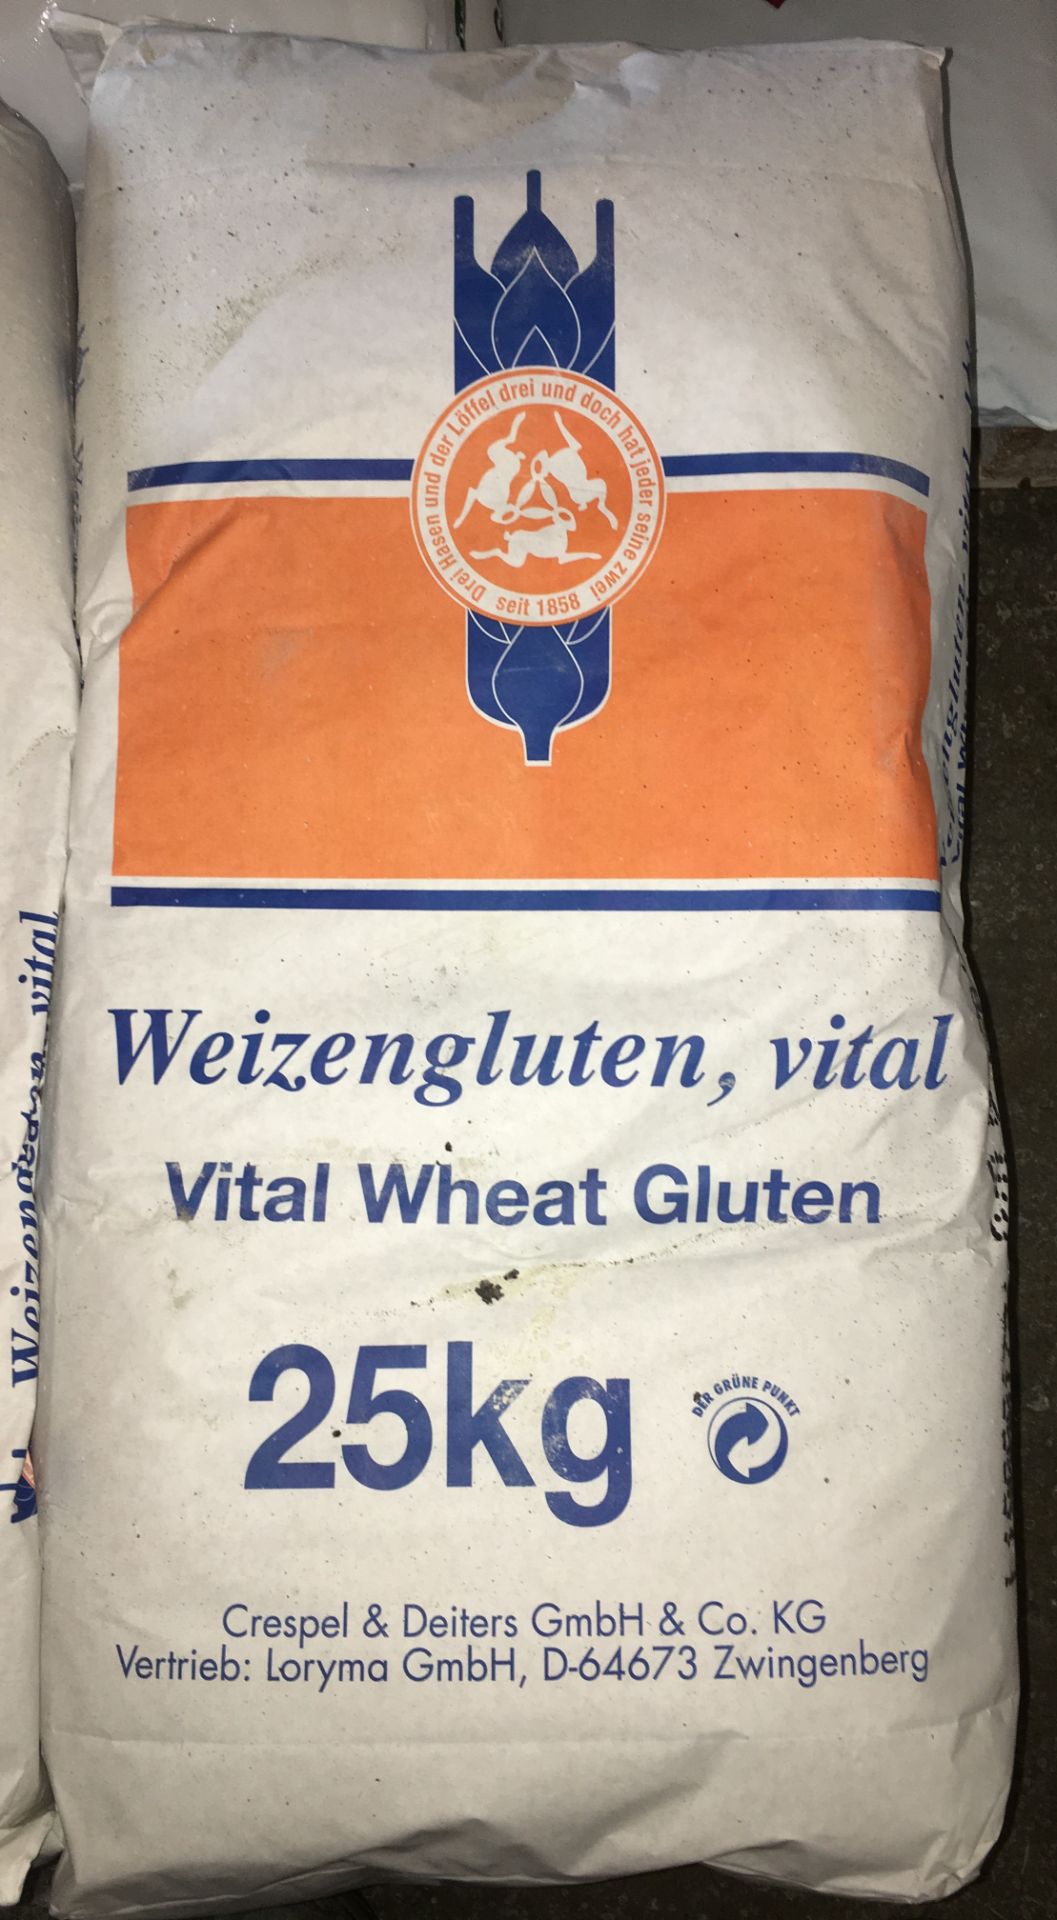 6 x 25kg Bags of Crespel & Deiters Vital Wheat Gluten - Image 3 of 3